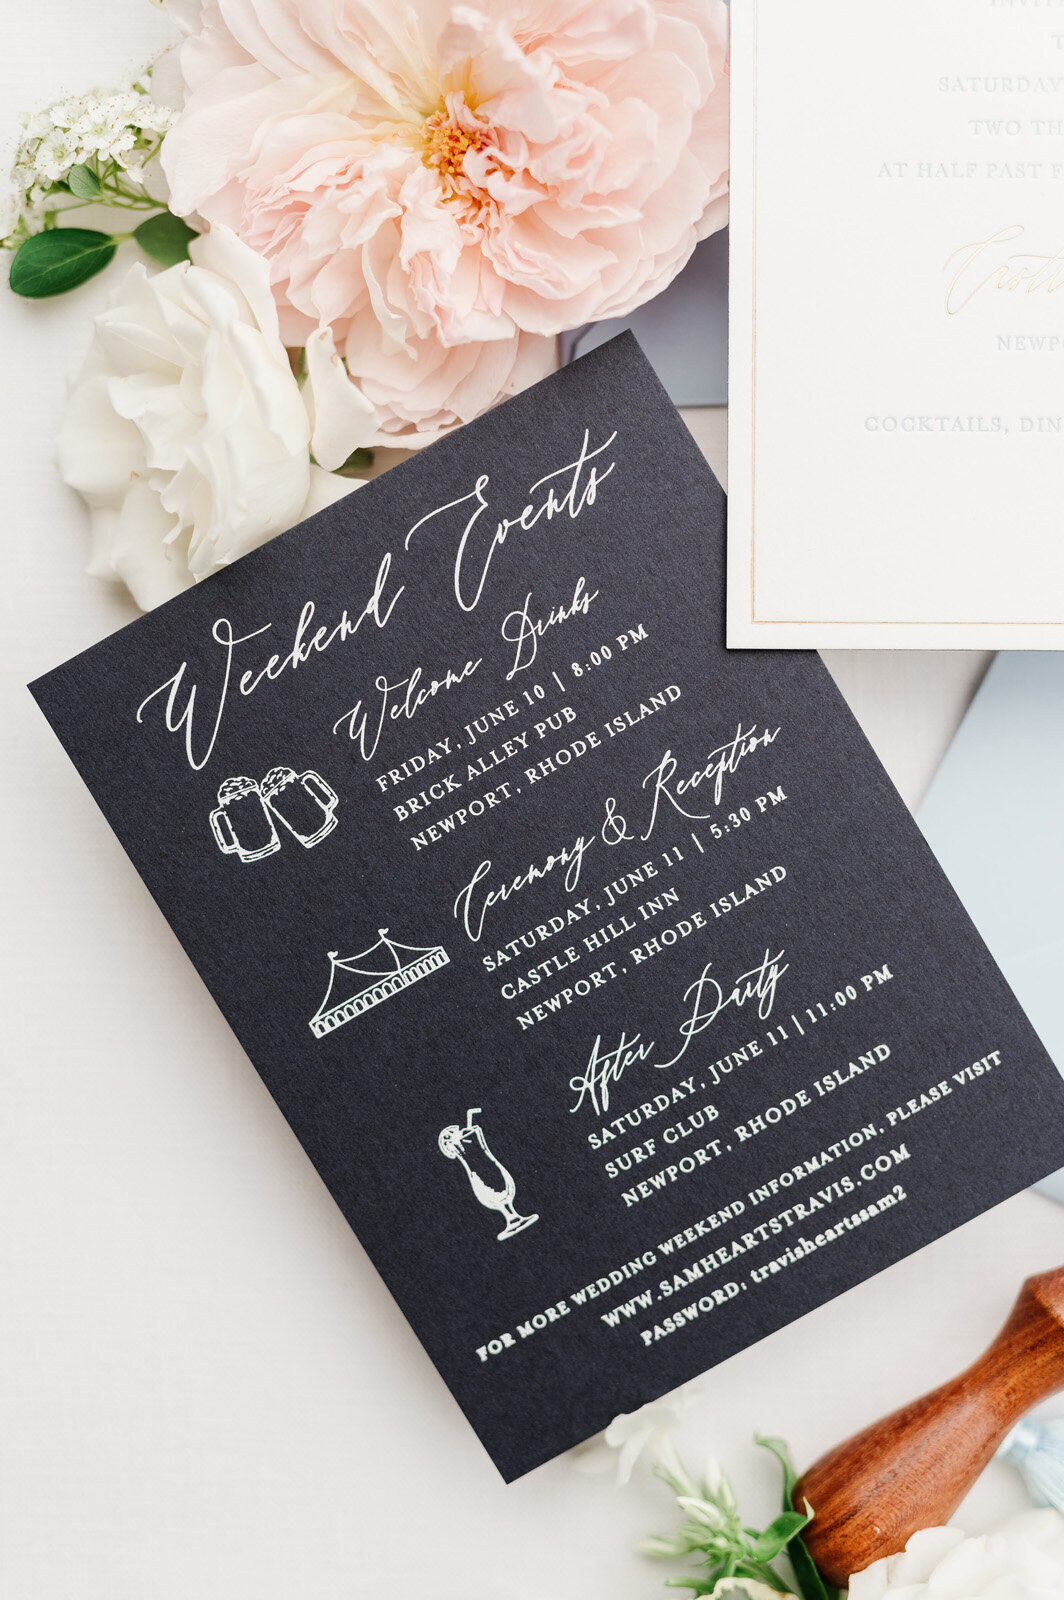 Kate-Murtaugh-Events-spring-cletterpress-invitations-stationery-blue-Newport-RI-Castle-Hill-Inn-wedding-planner